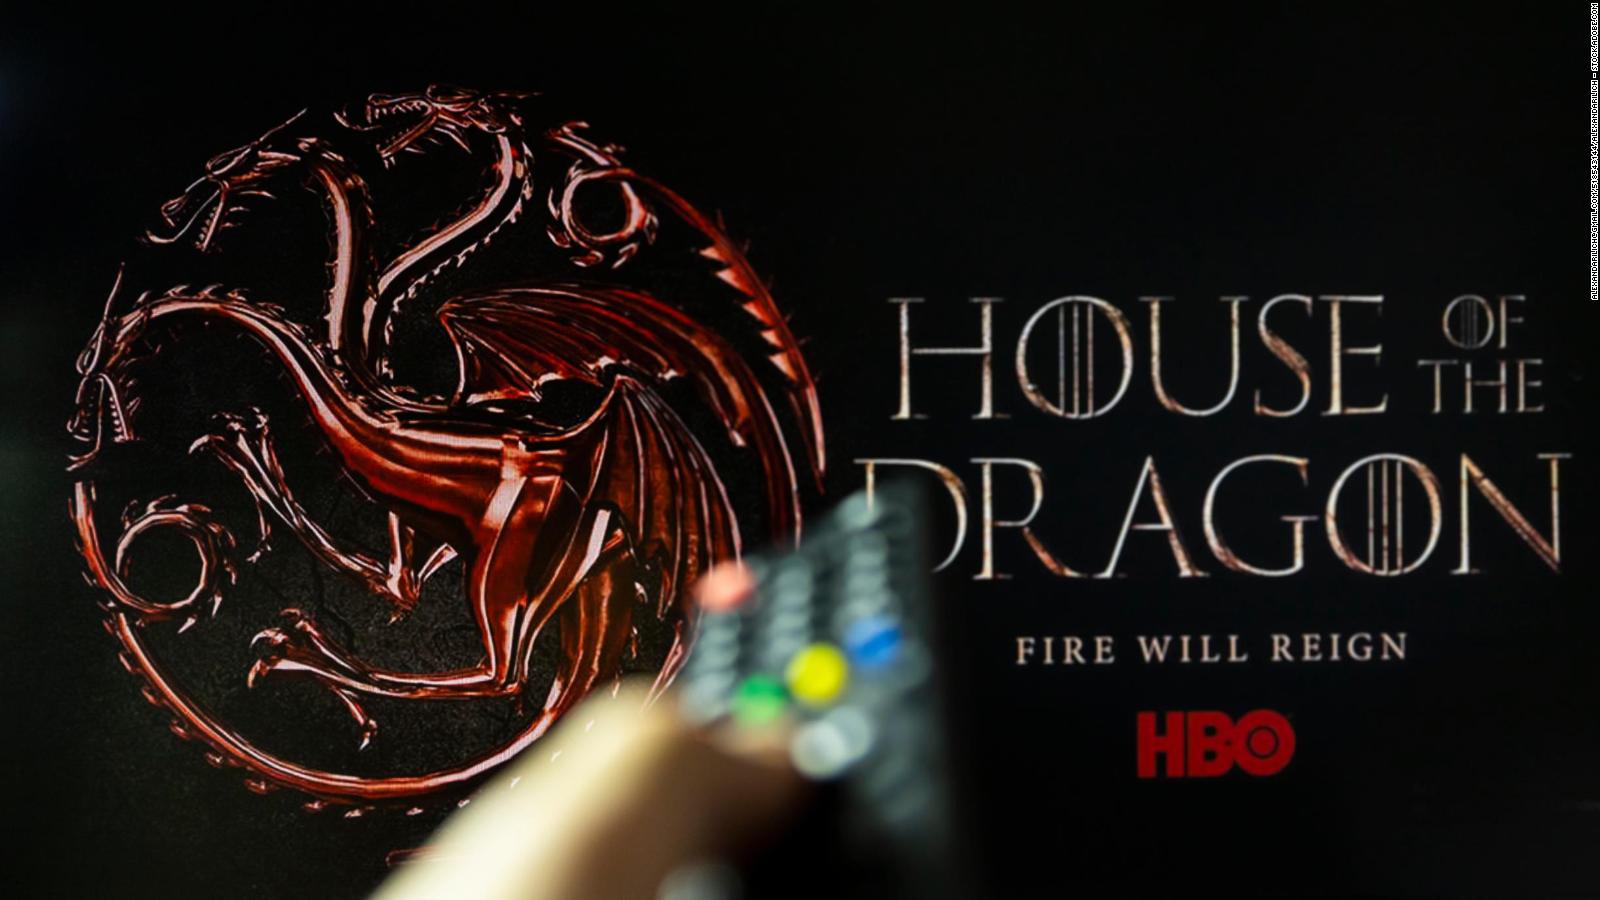 Hbo Confirma Que House Of The Dragon Tendrá Una Segunda Temporada